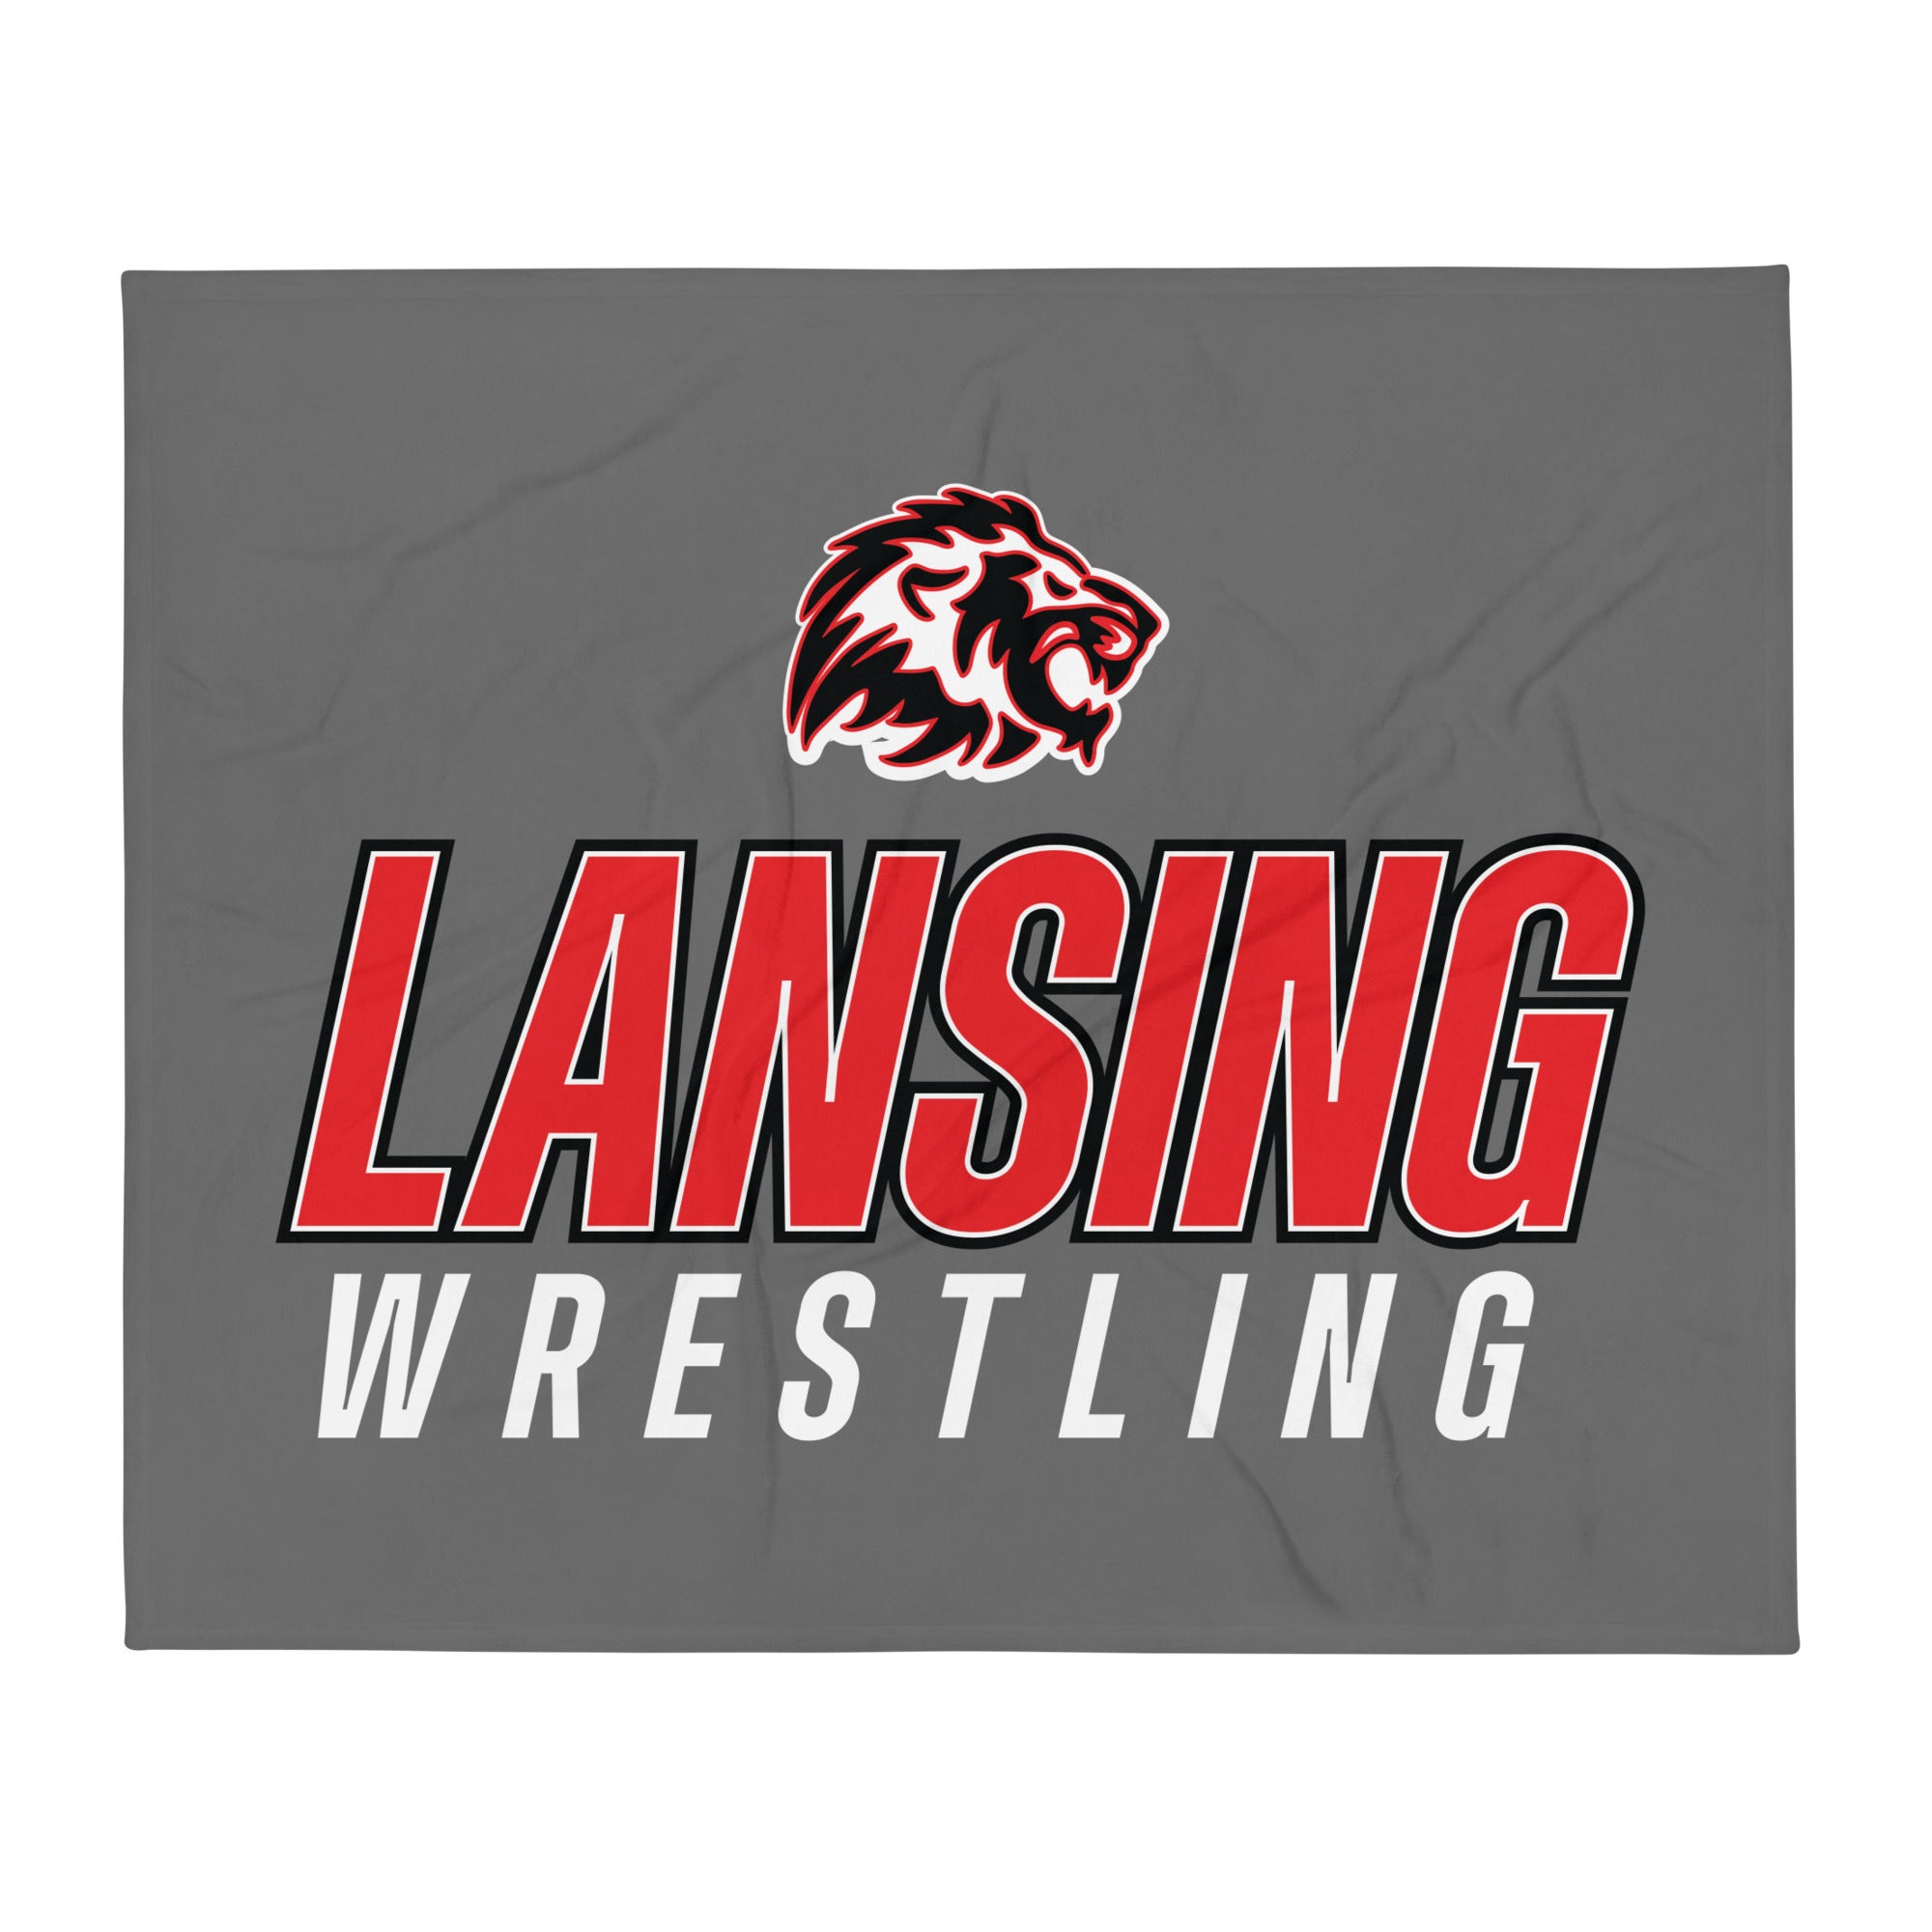 Lansing Wrestling  Throw Blanket 50 x 60